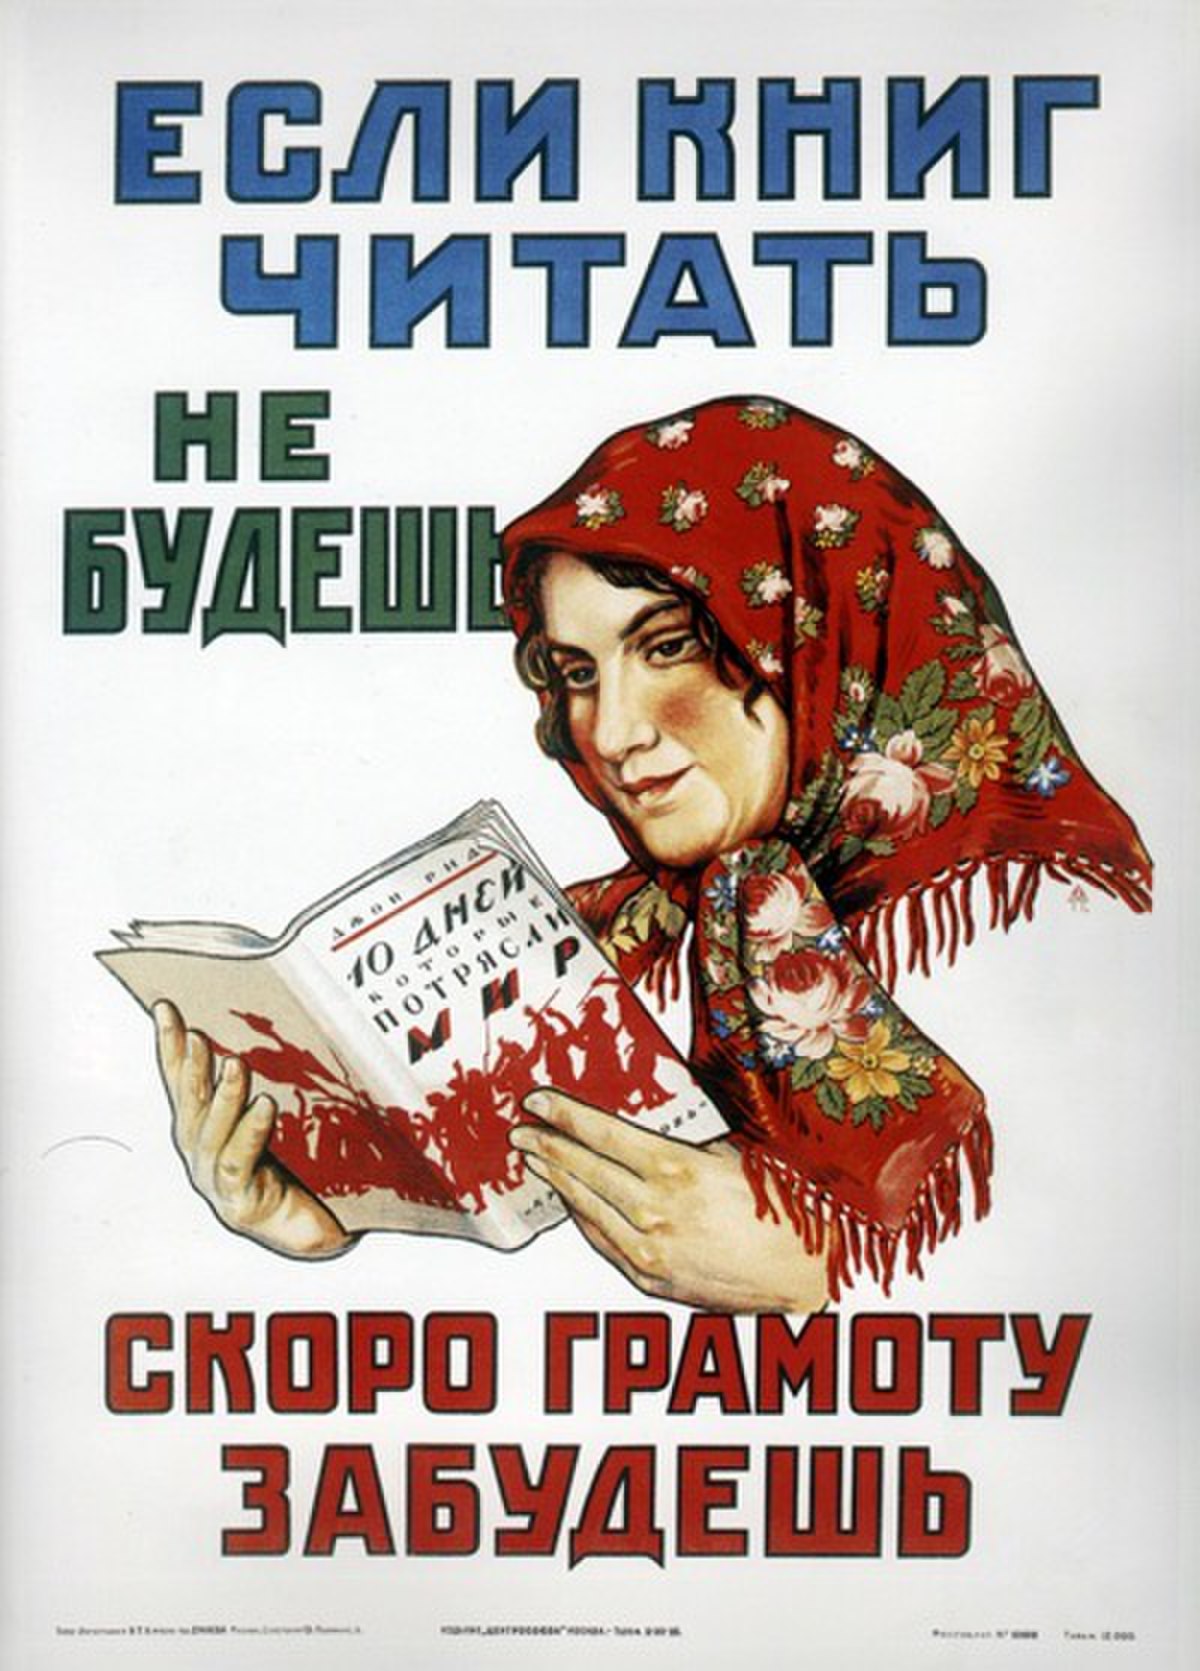 Culturele revolutie in de Sovjet-Unie